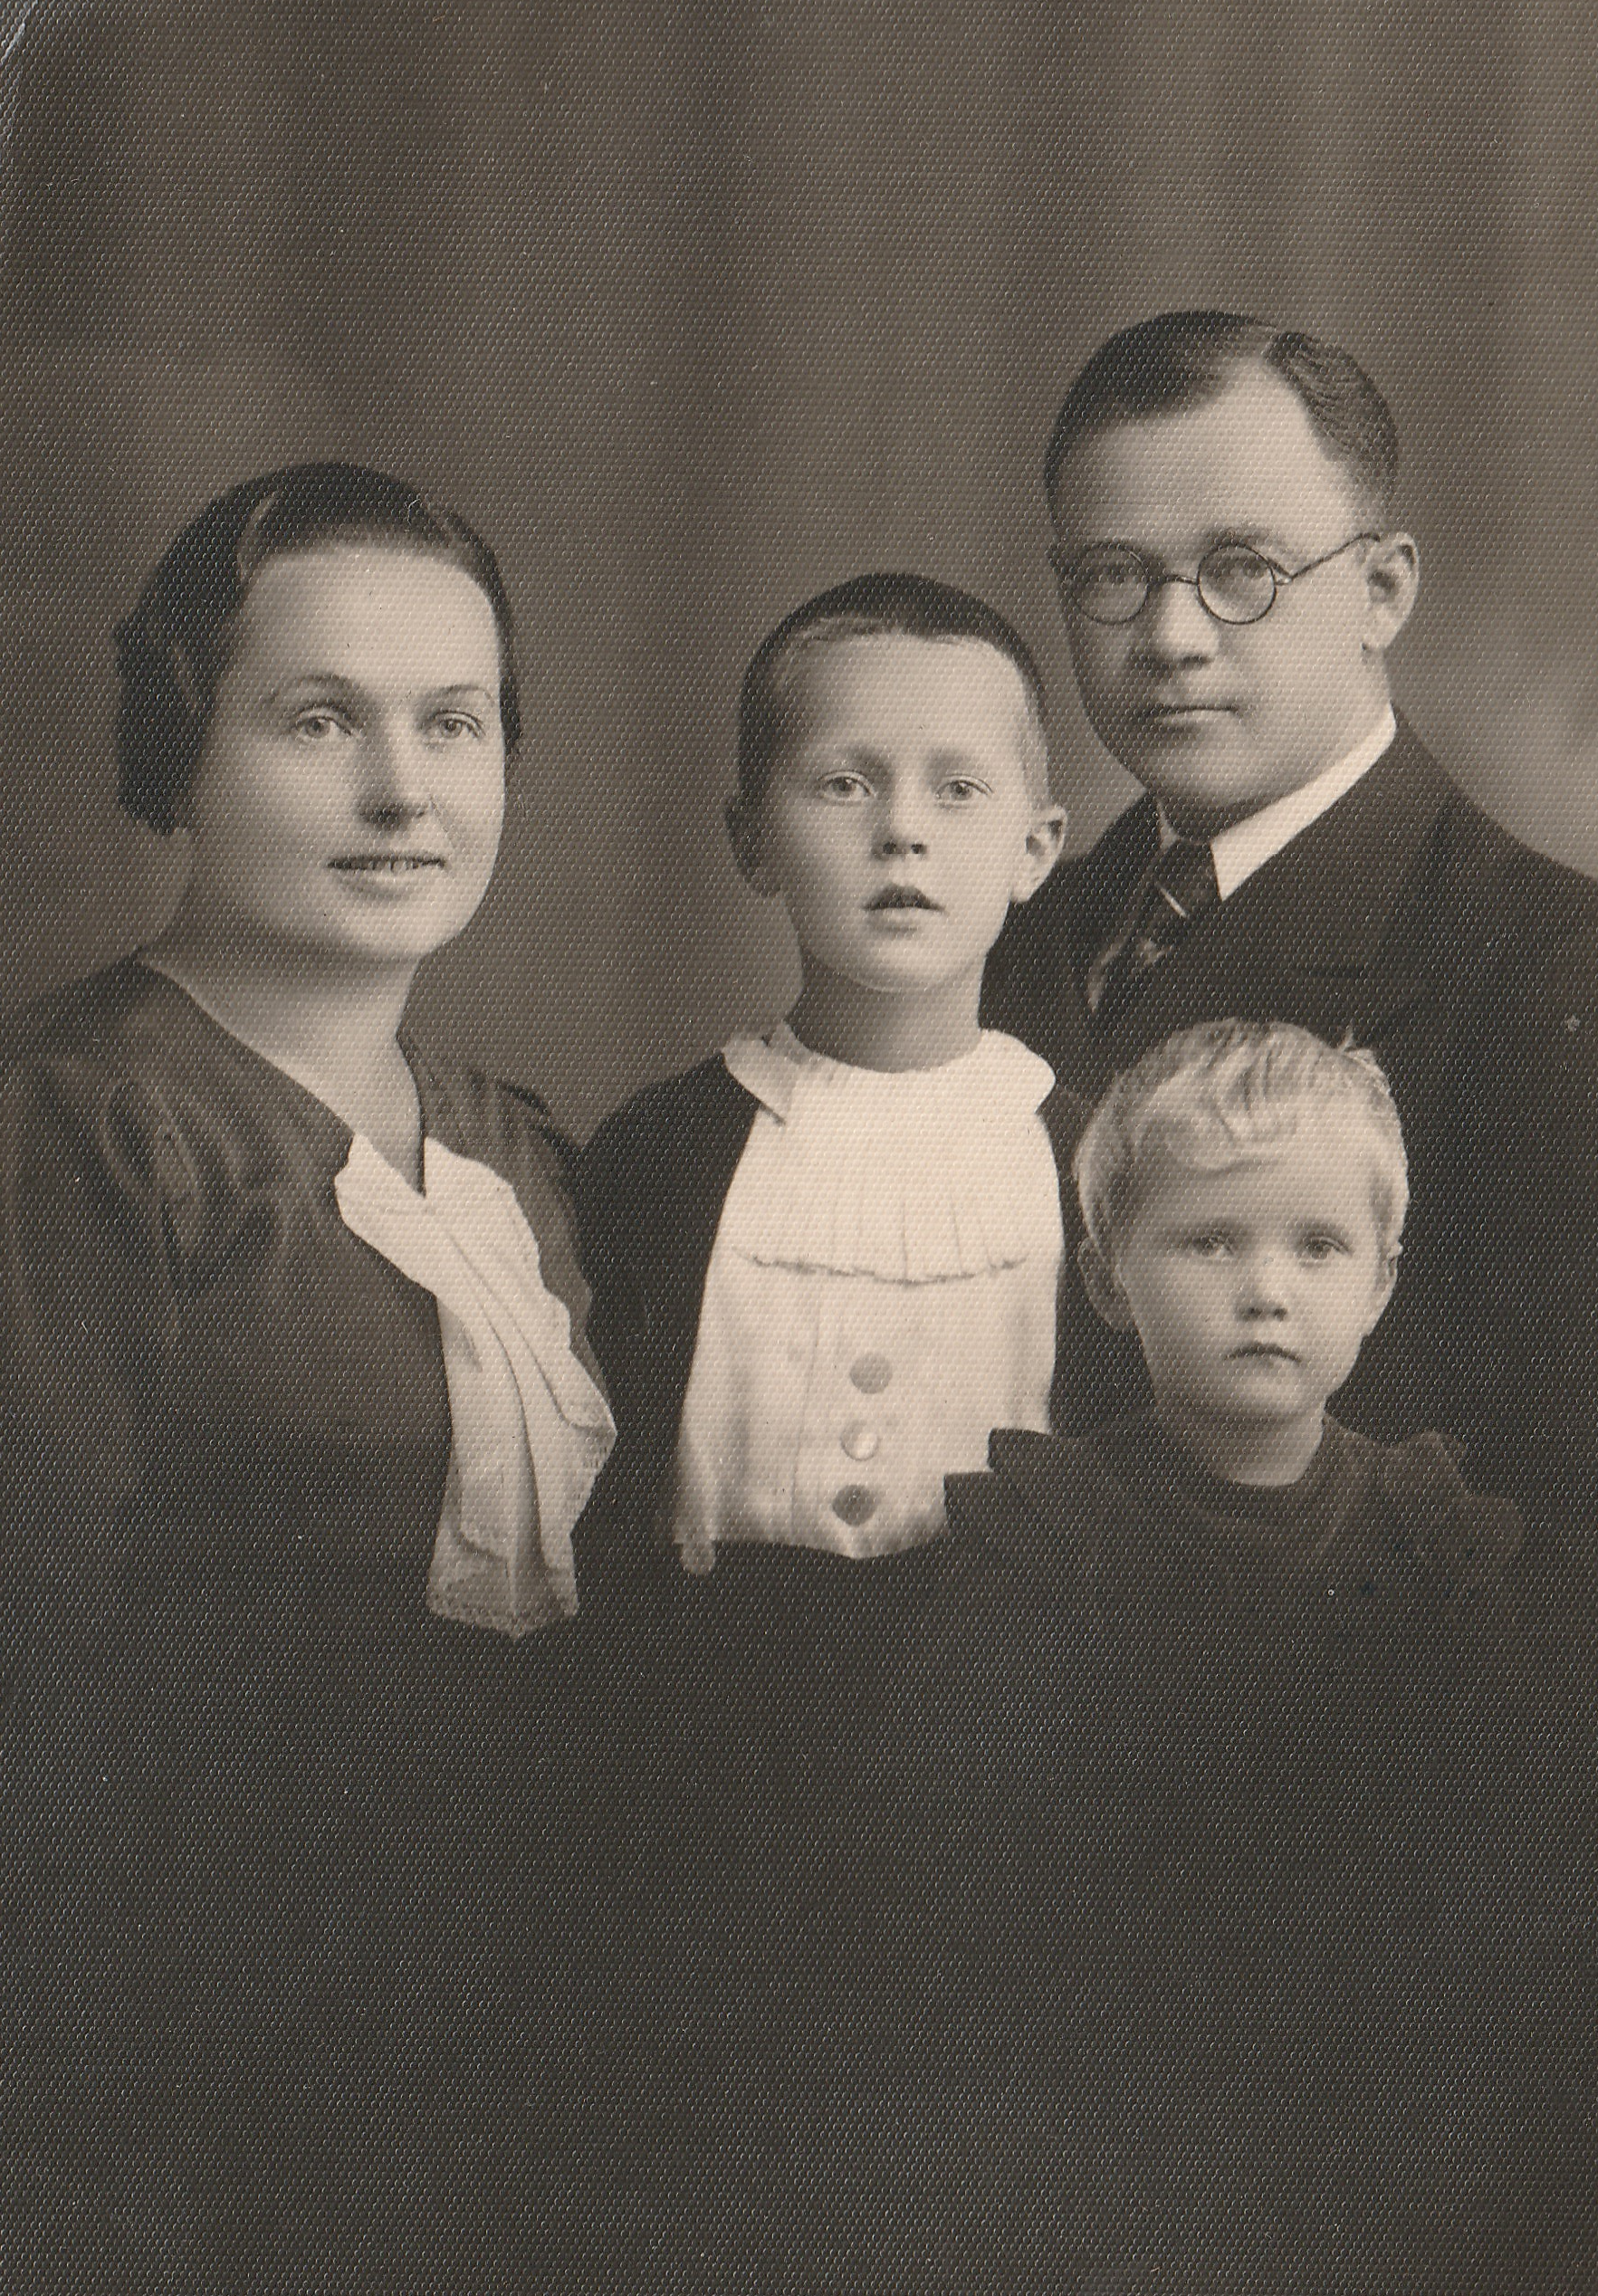 Starkų šeima Elena Starkienė ir Antanas Starkus su savo vaikais Kęstučiu ir Elena